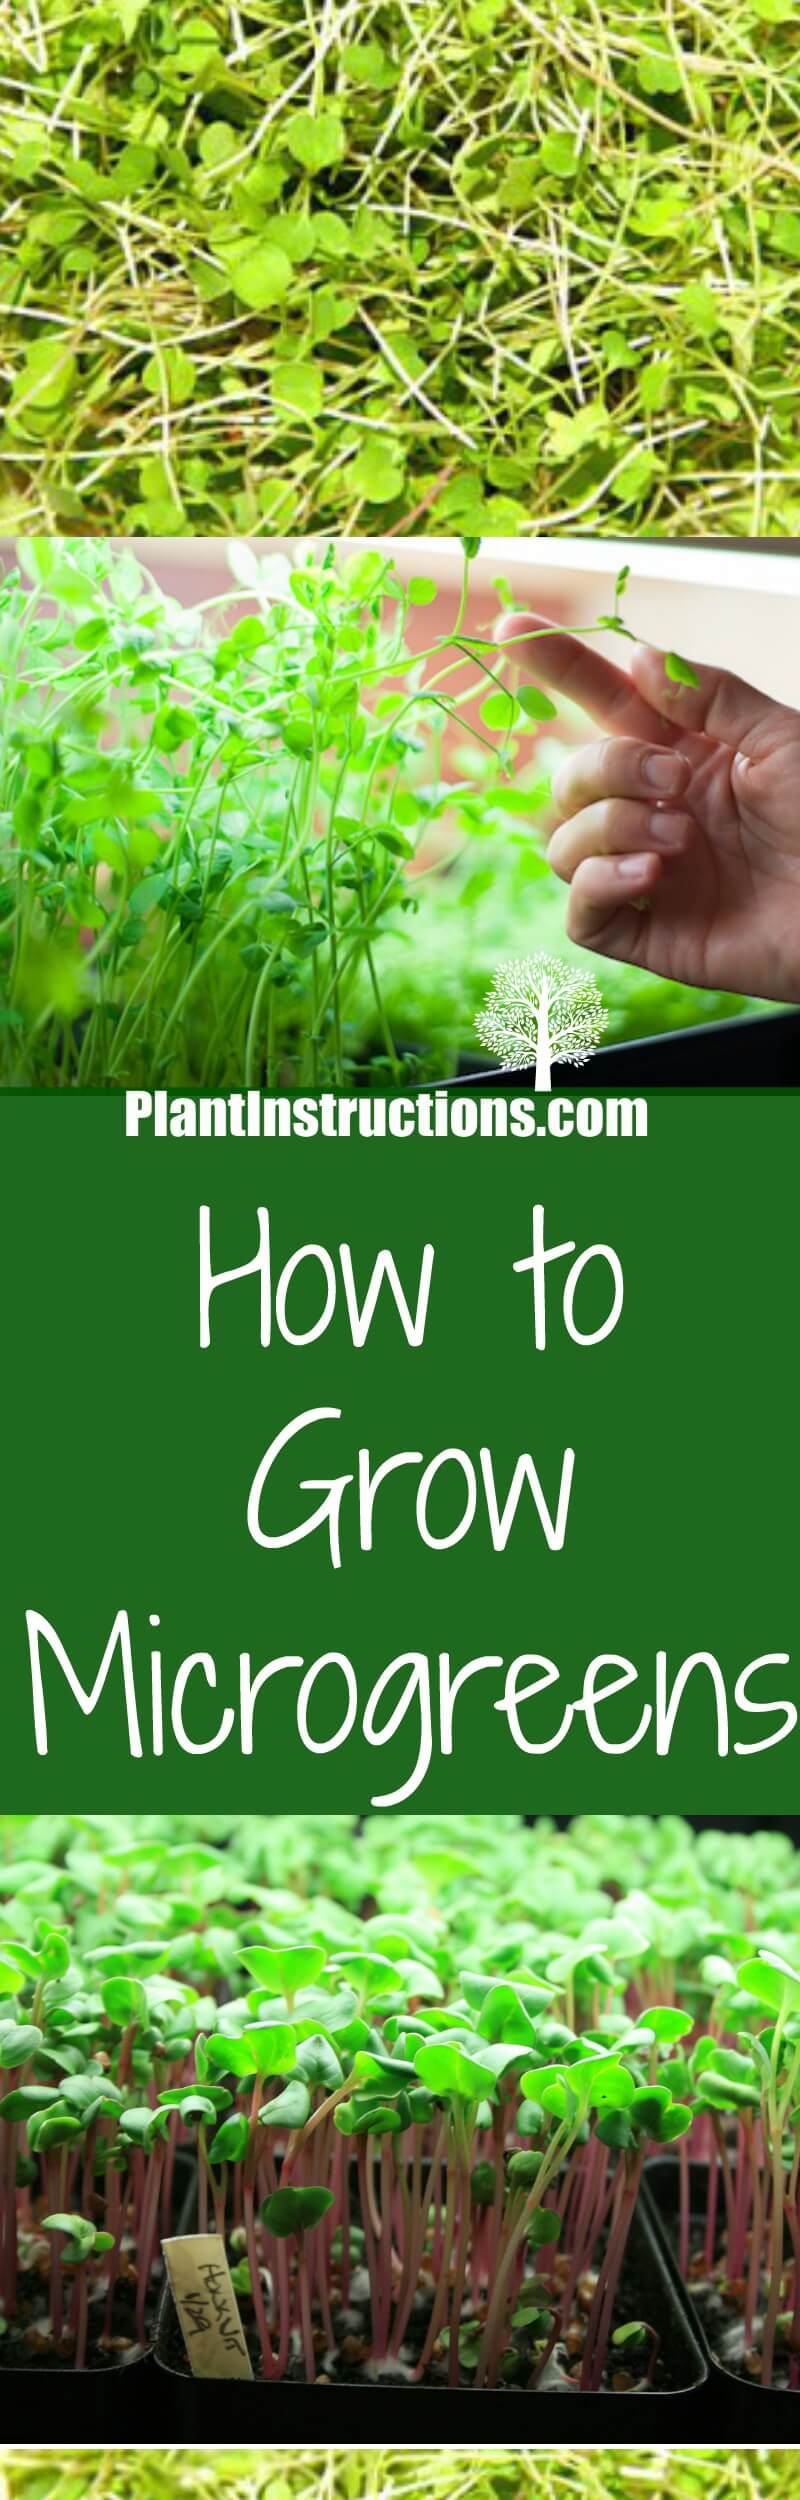 microgreens grow planting happy